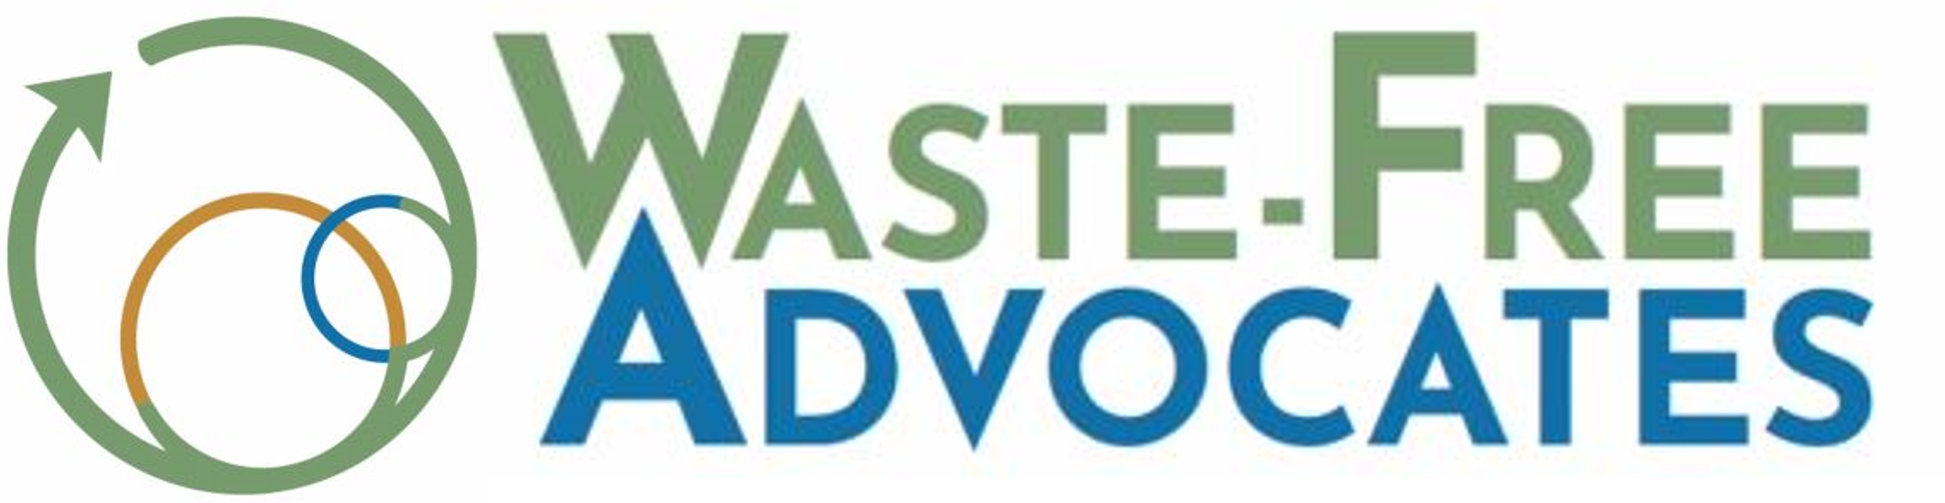 Waste-Free Advocates